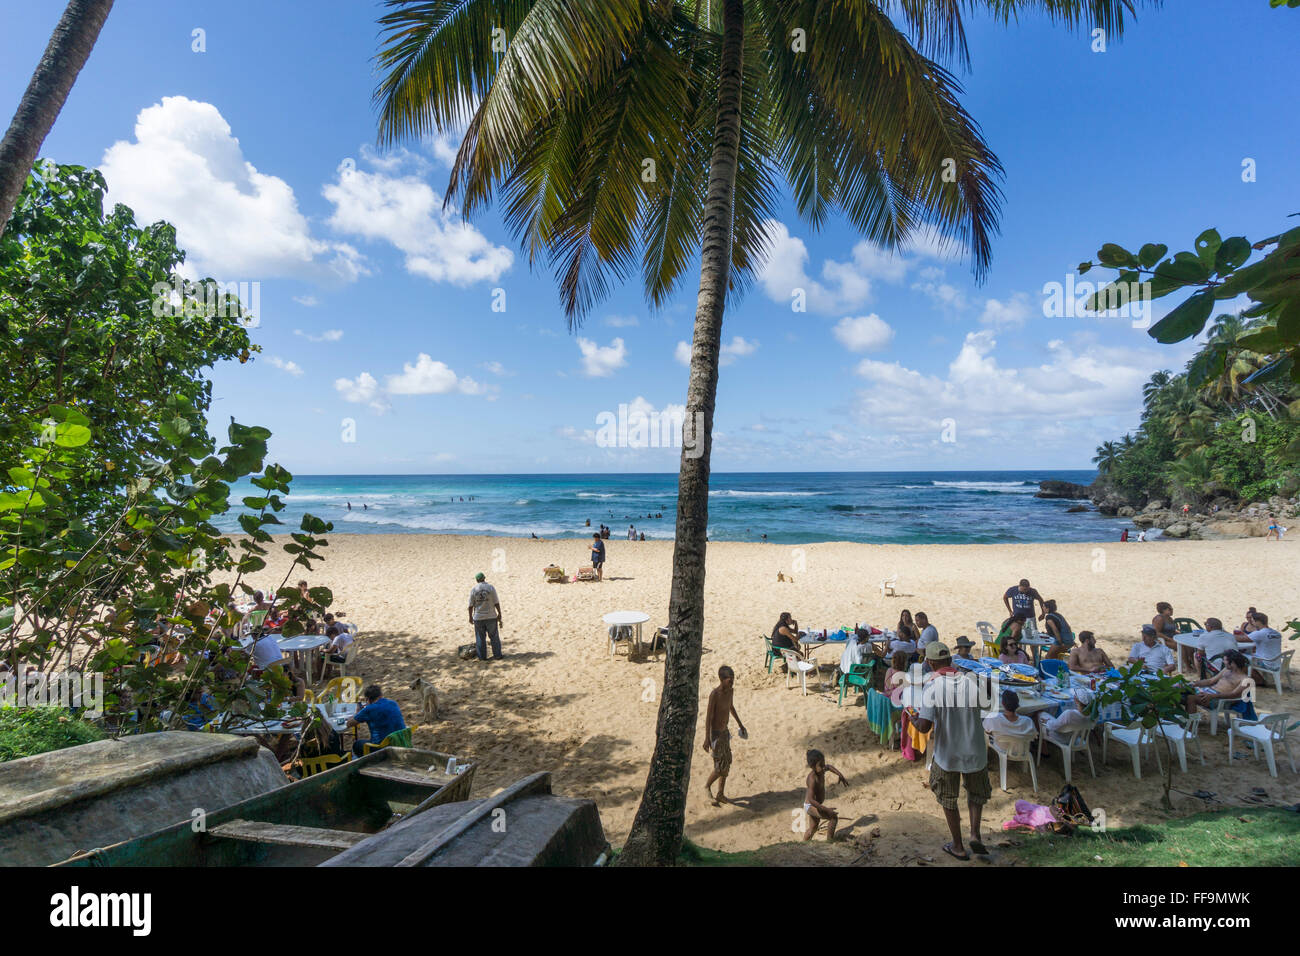 Playa Grande, Sunday brunch at the beach, Dominican Republic Stock Photo